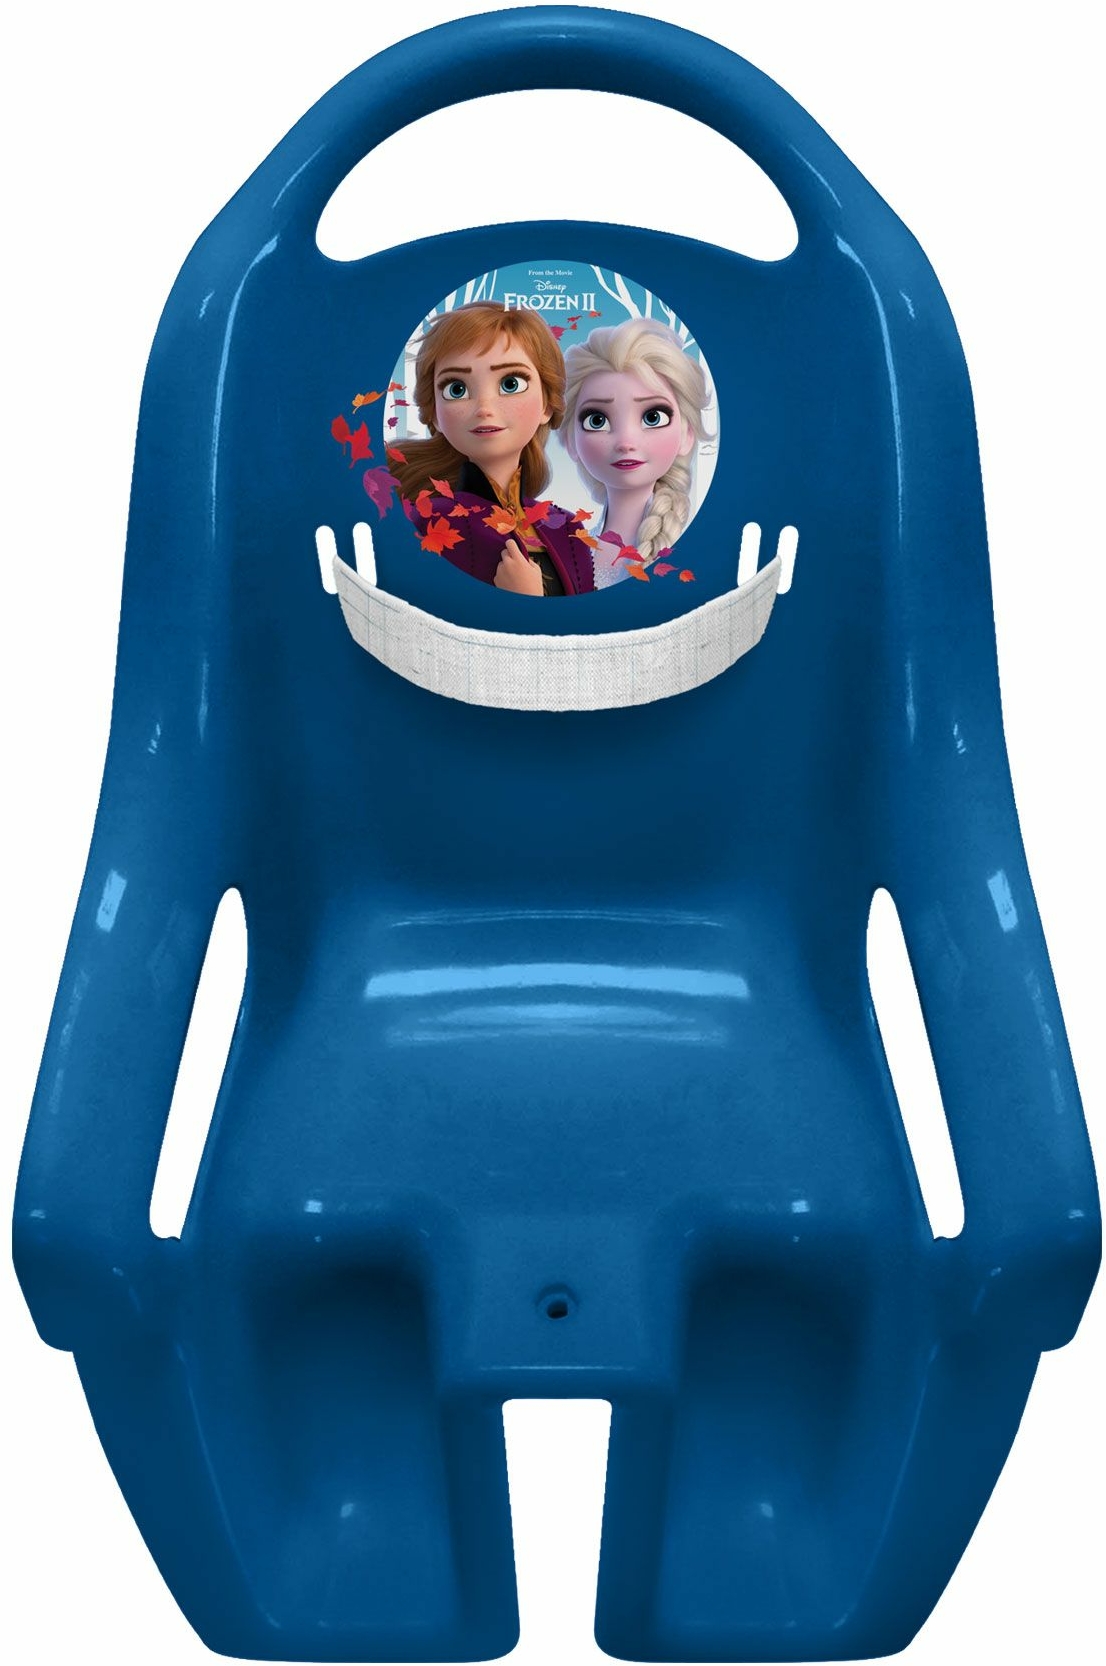 kinderartikel/Kinderartikel: Disney  Fahrrad Puppen Sitz Frozen II 